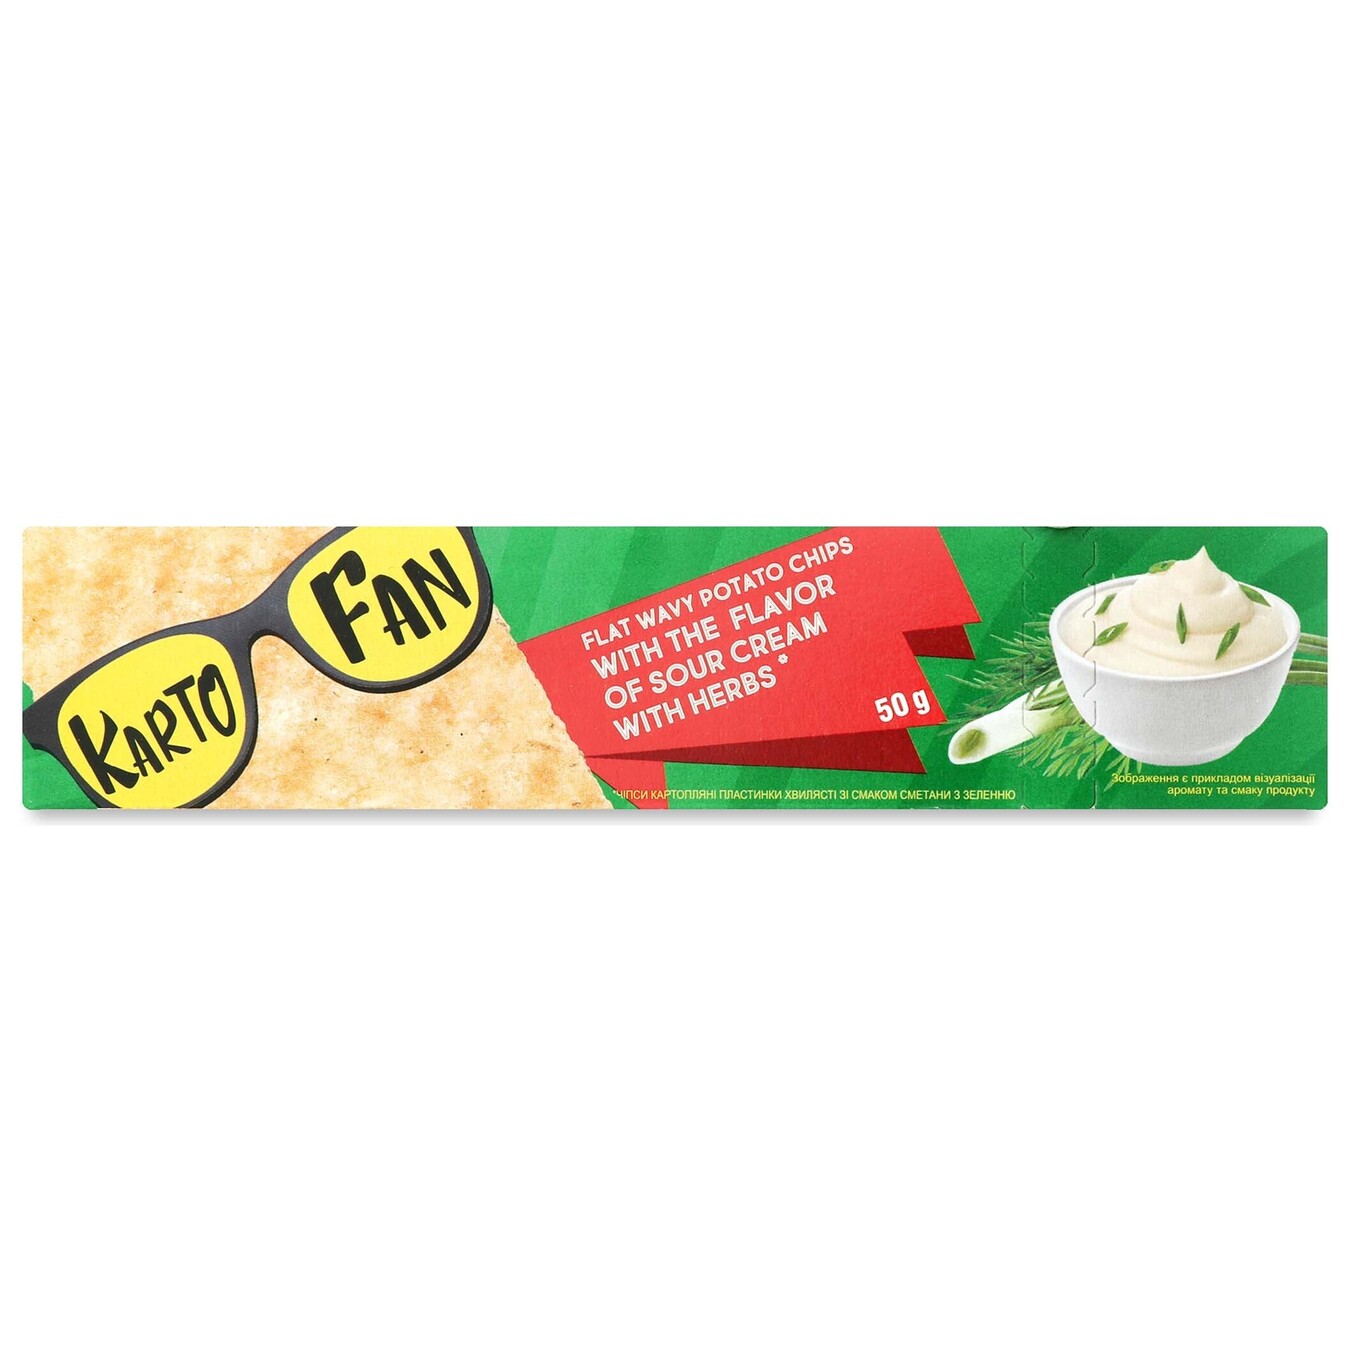 Potato chips TM KartoFUN wavy with a taste of sour cream with greens 50 g